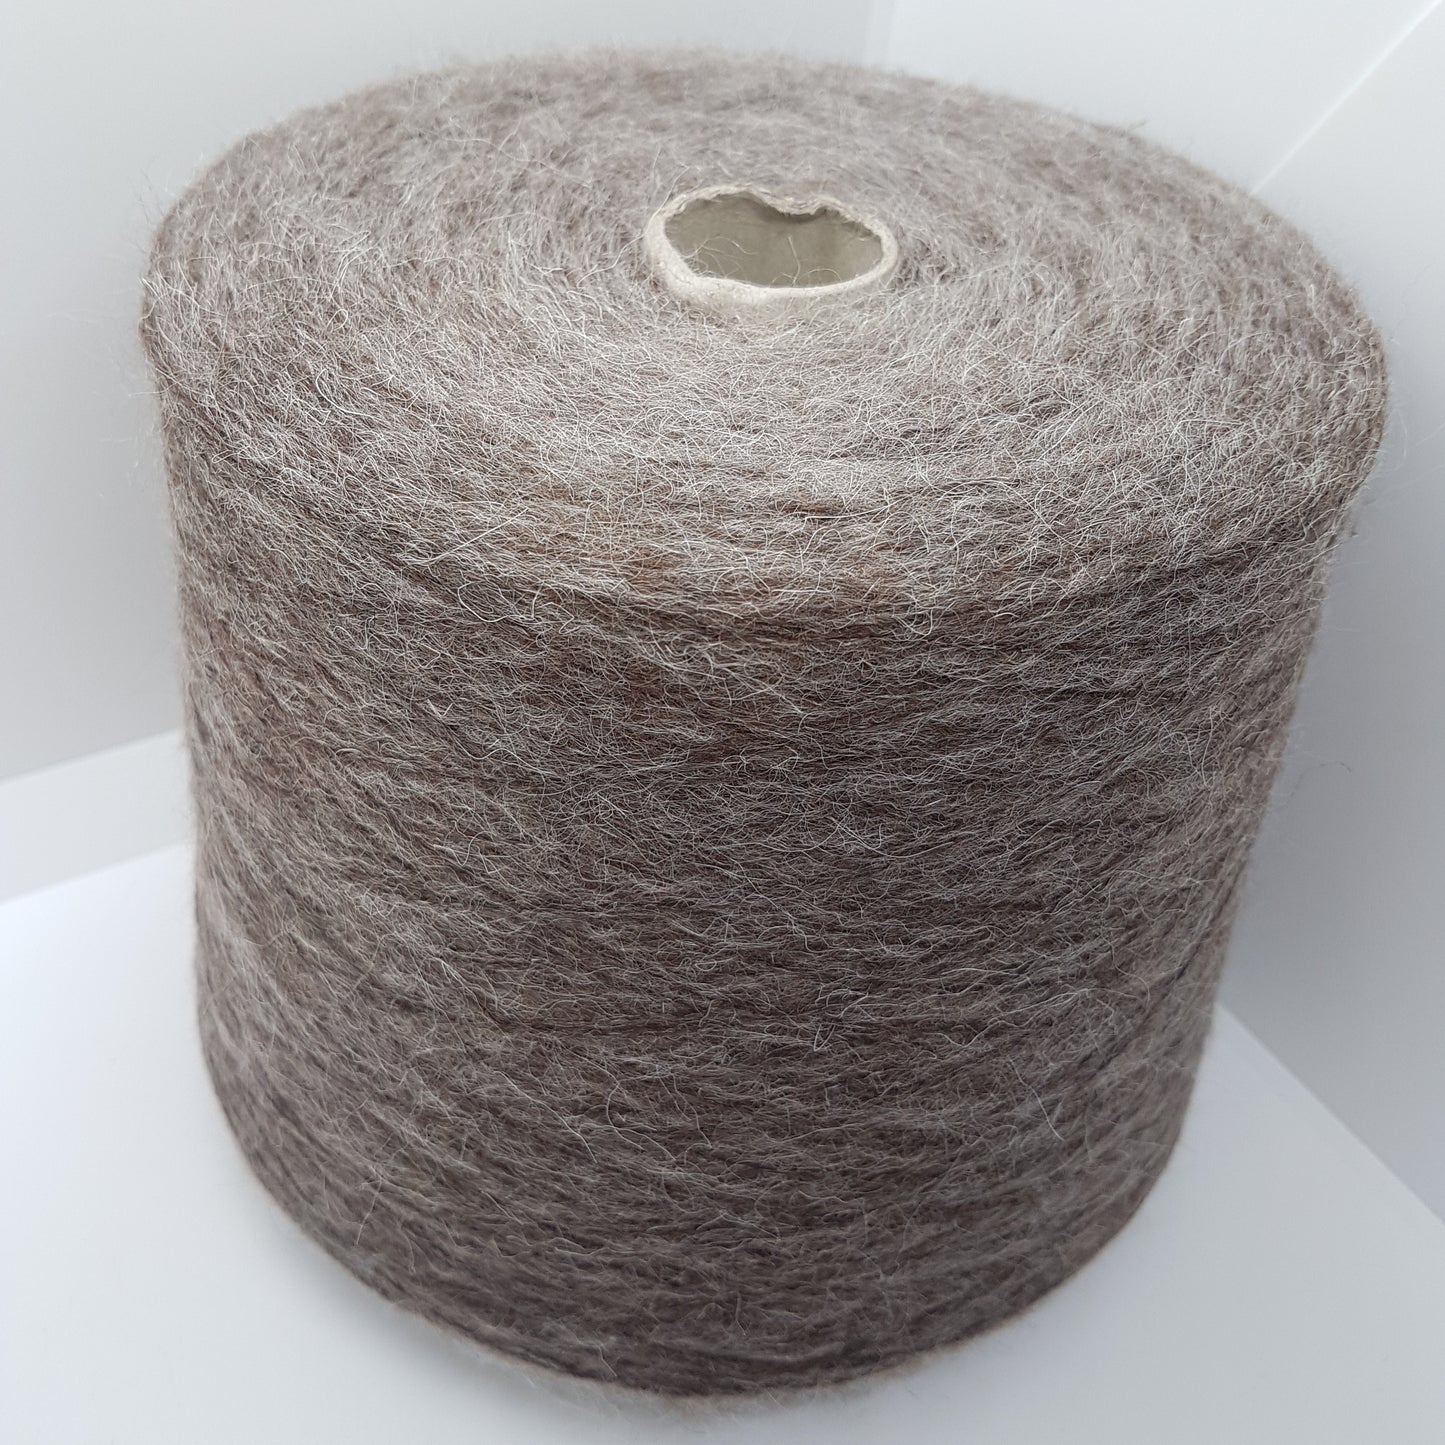 100g Mohair Soft Italian yarn Italian color taupe Tortora brown gray N.215